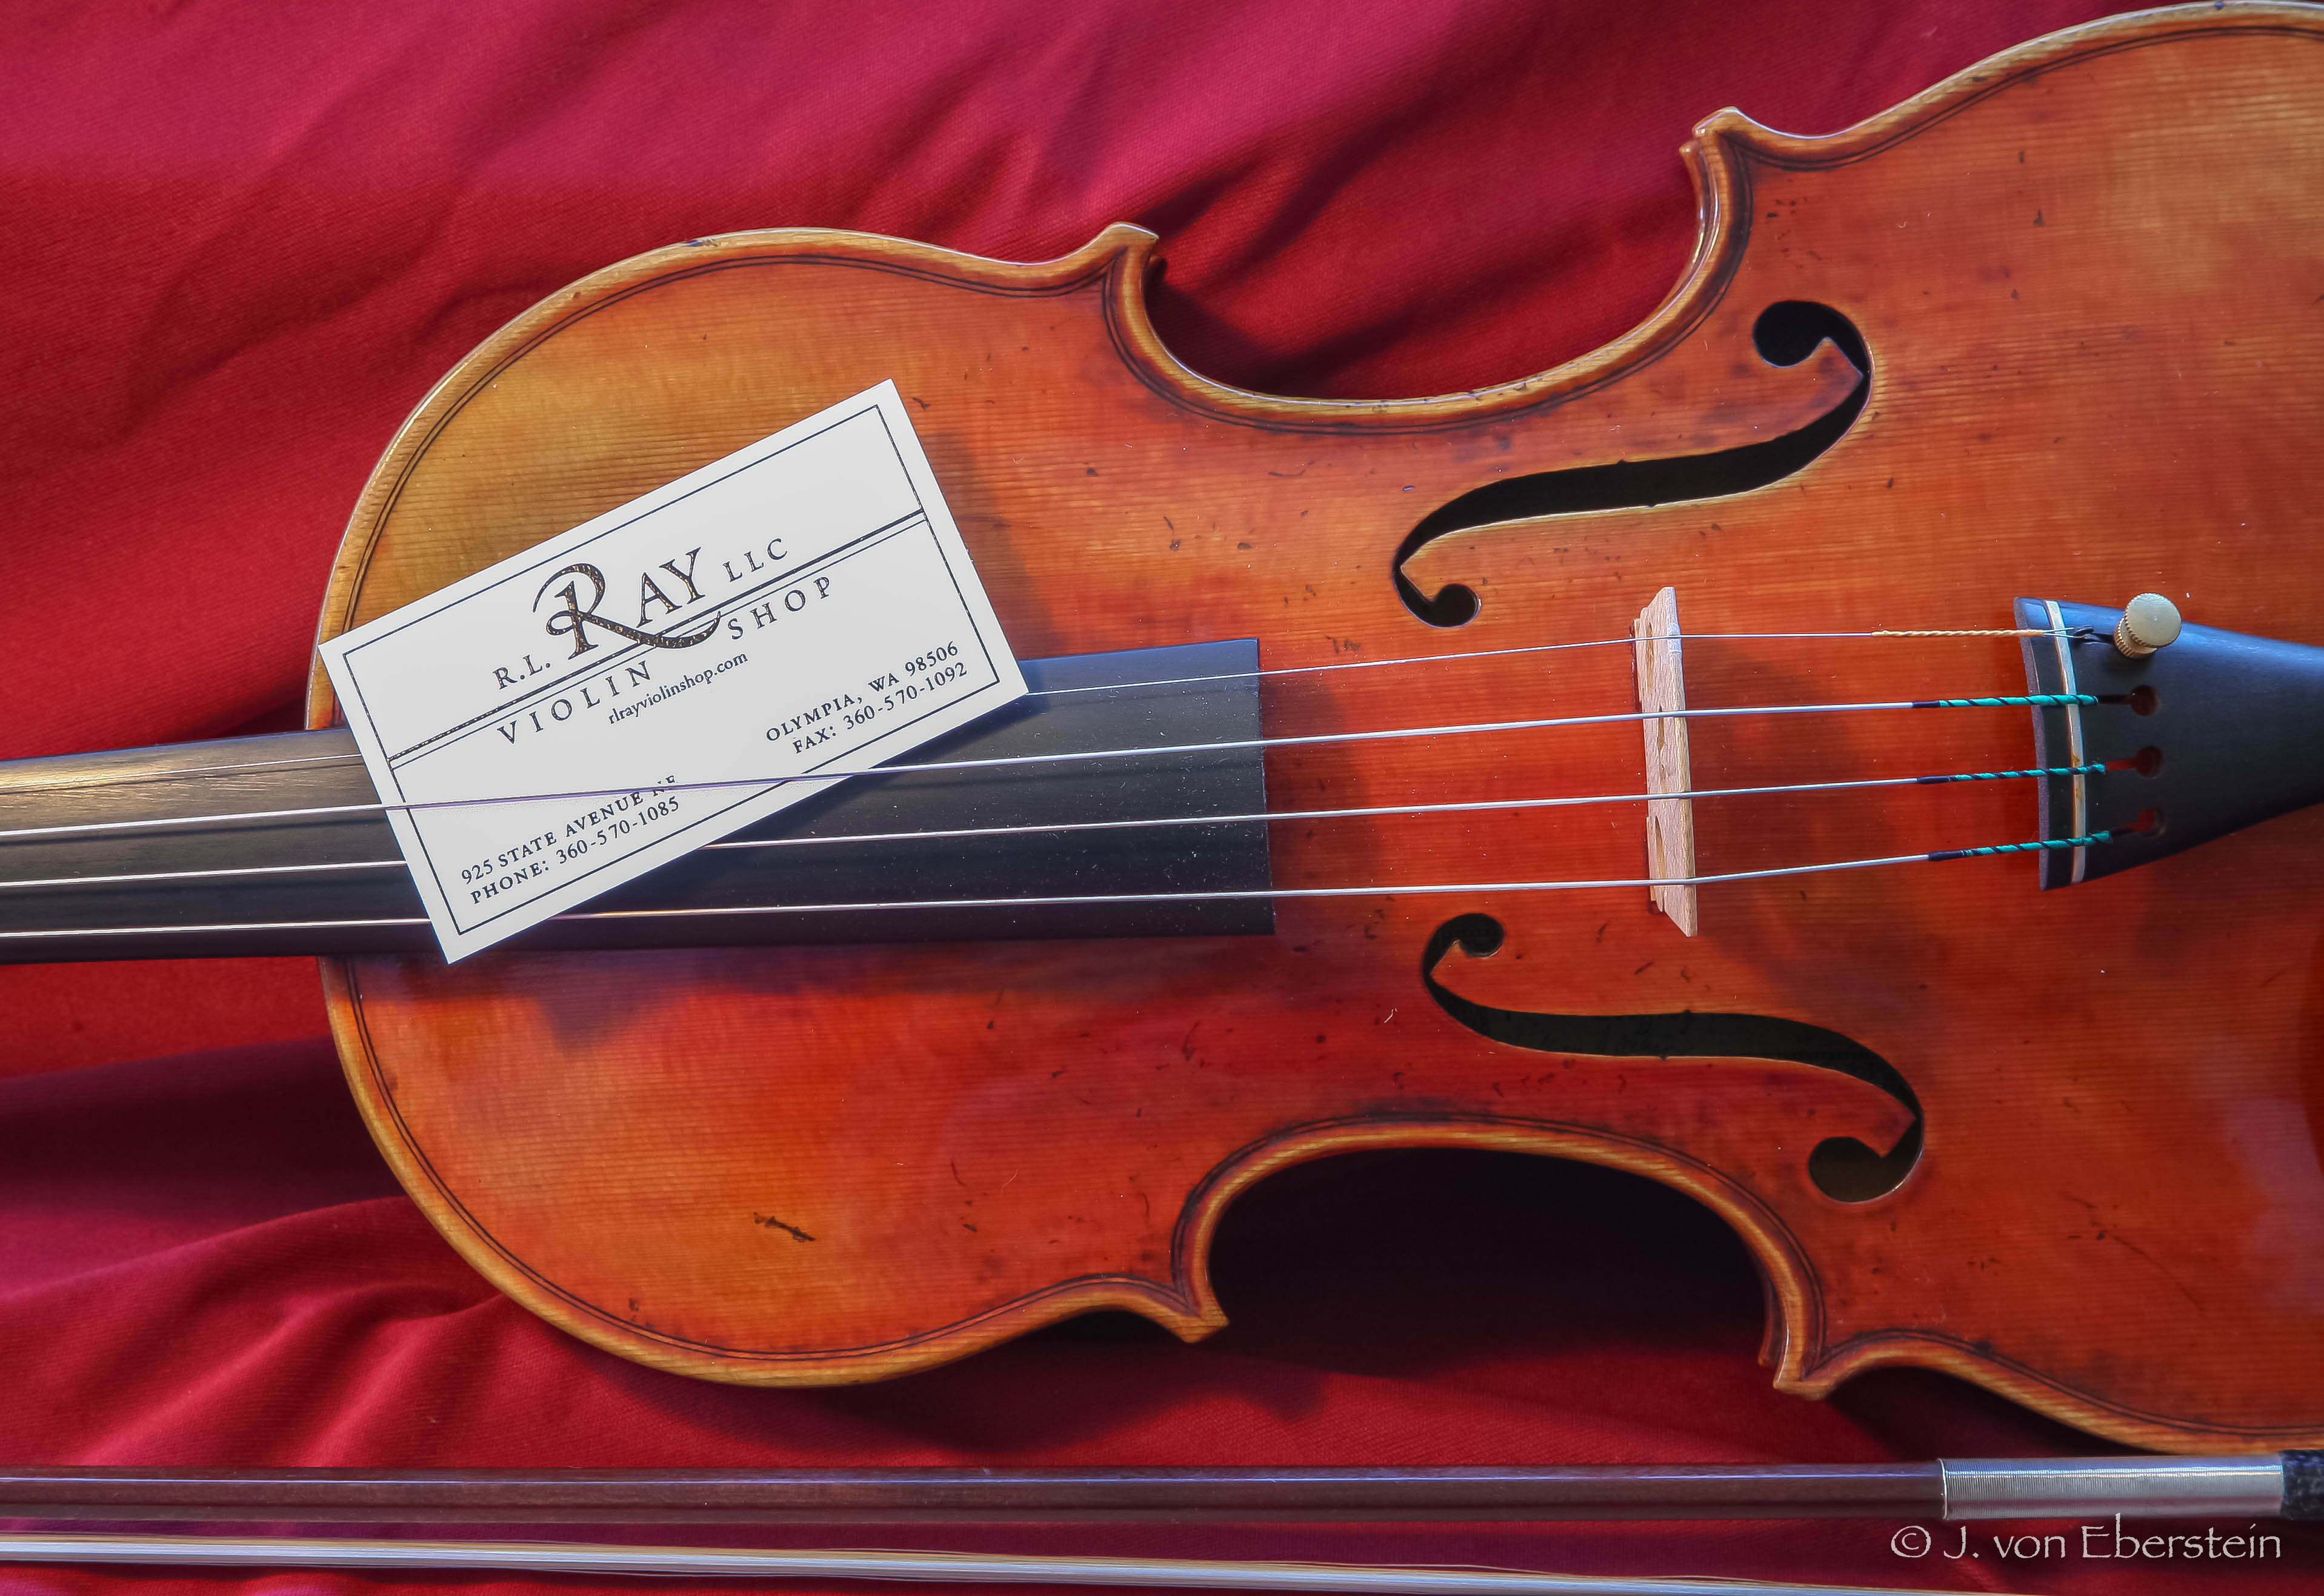 R. L. Ray Violin Shop, Olympia, WA